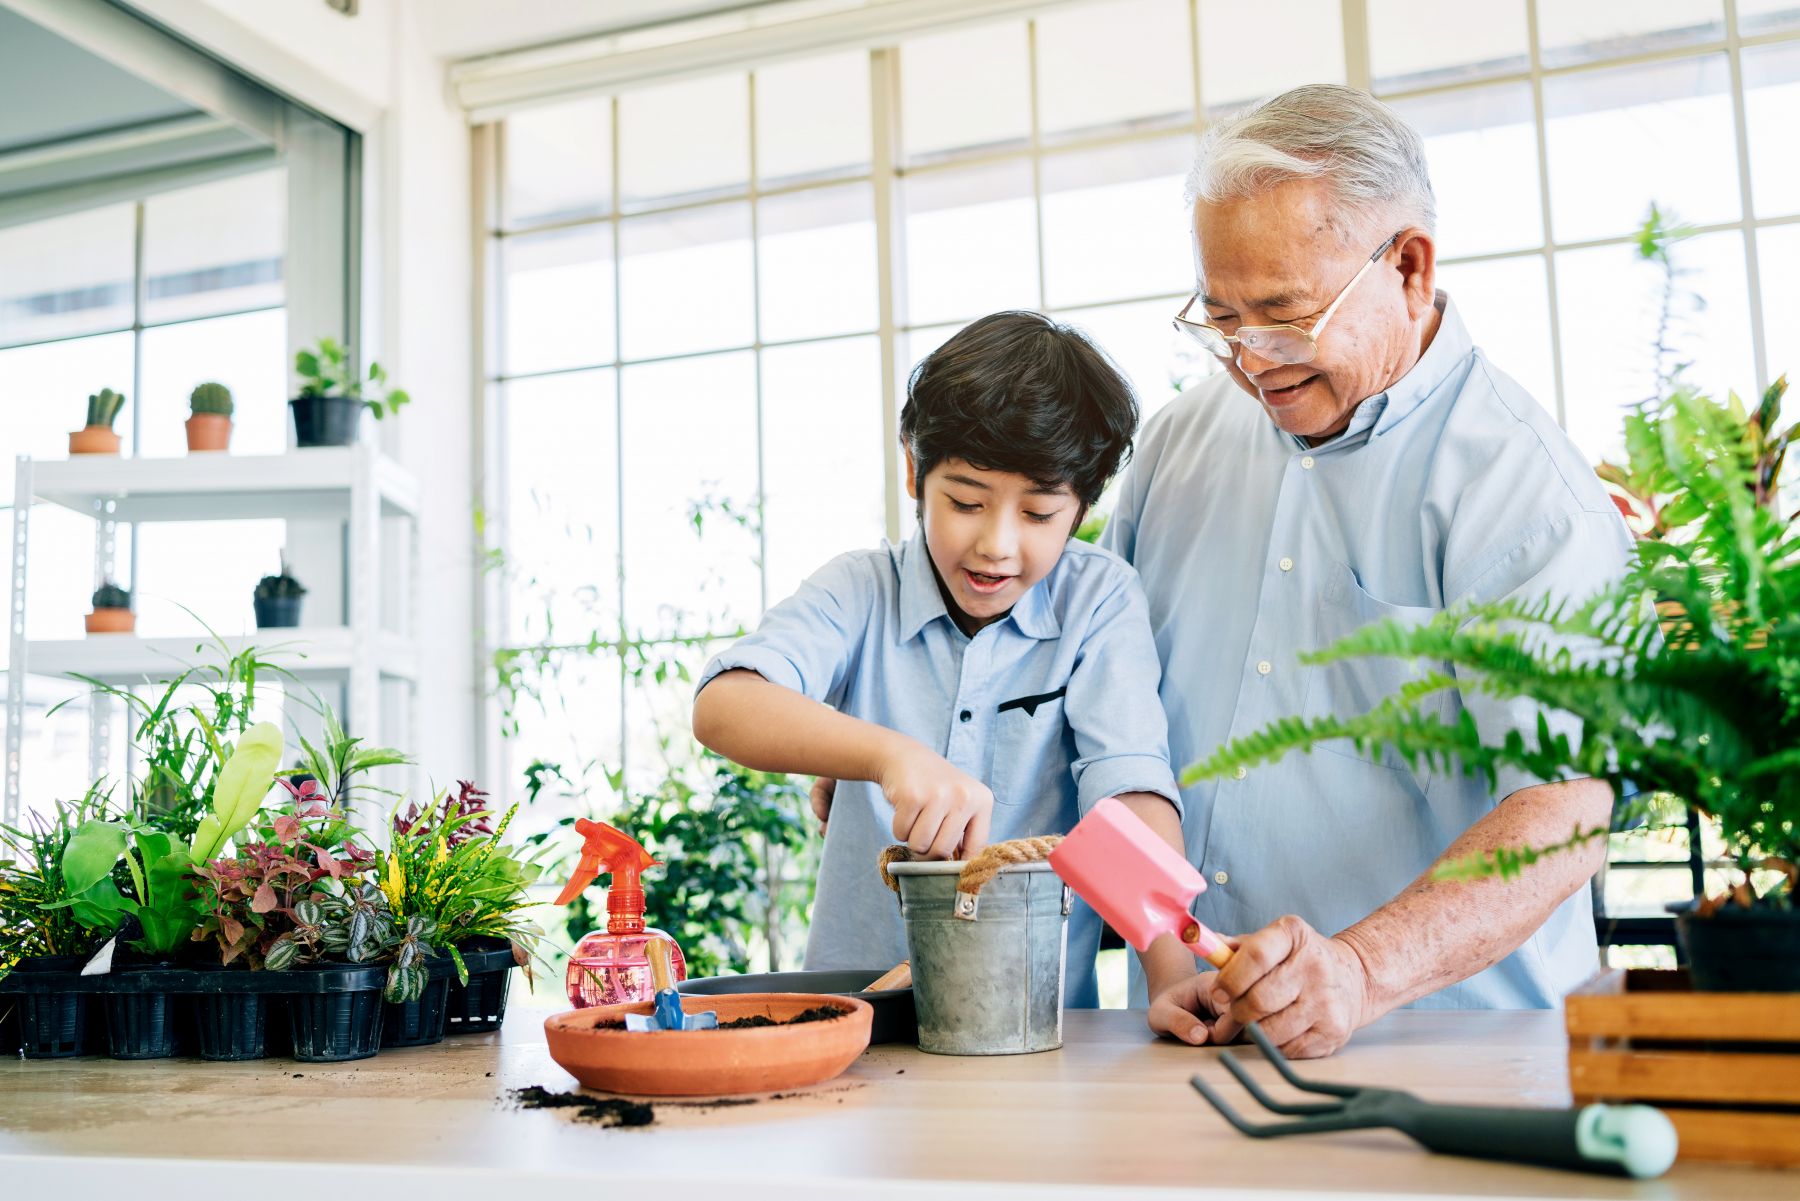 Grandfather and grandson gardening